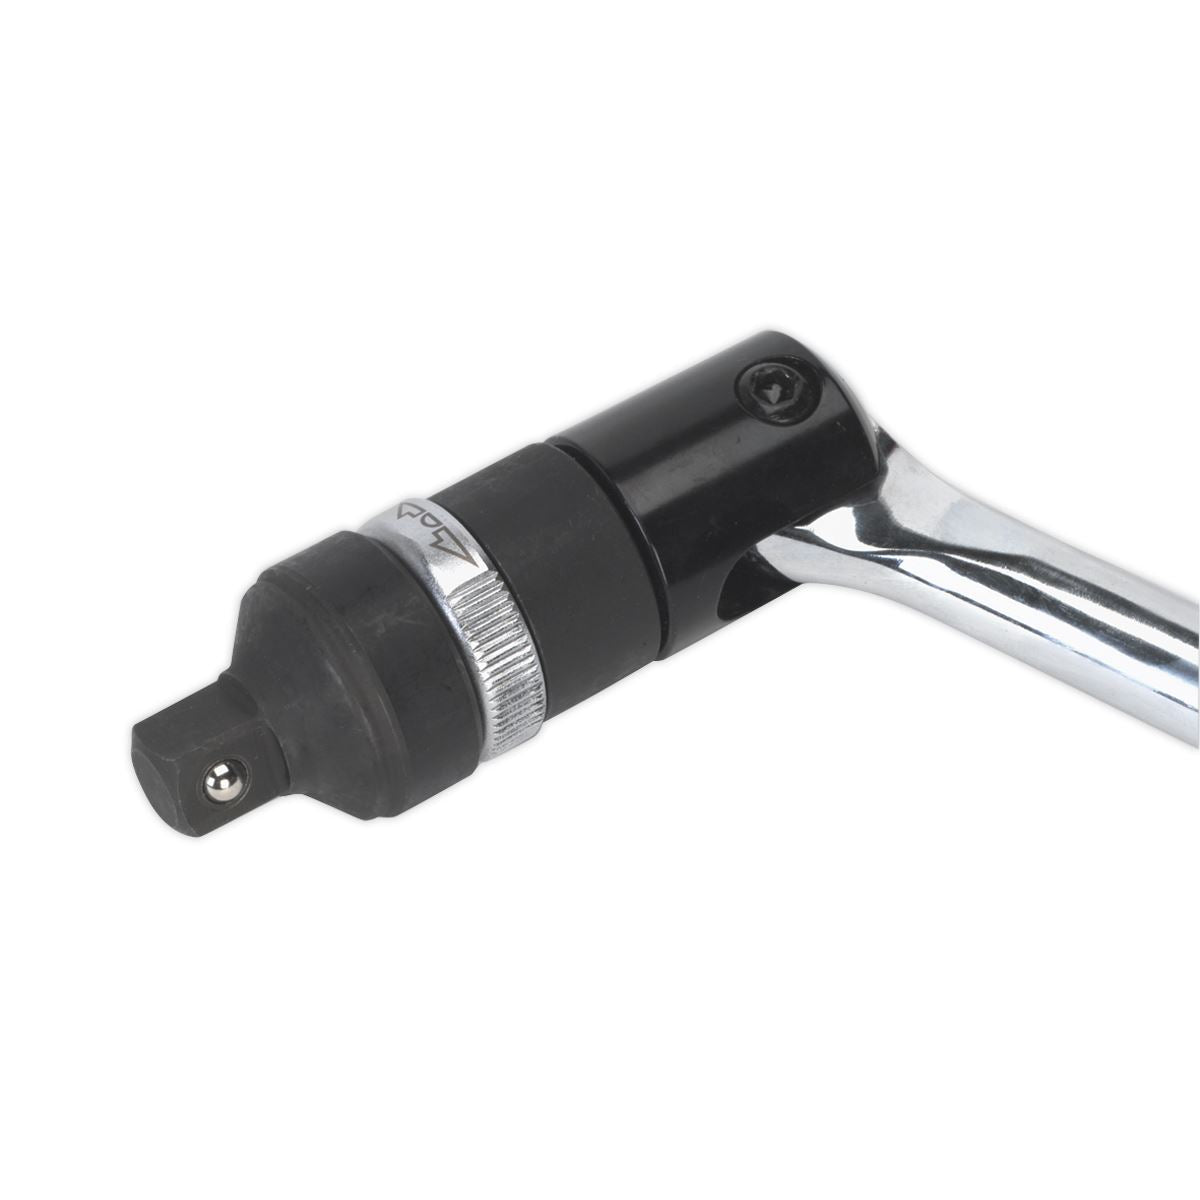 Sealey Premier Socket Ratchet Adaptor 1/2" Drive 512Nm Torque 24 Tooth